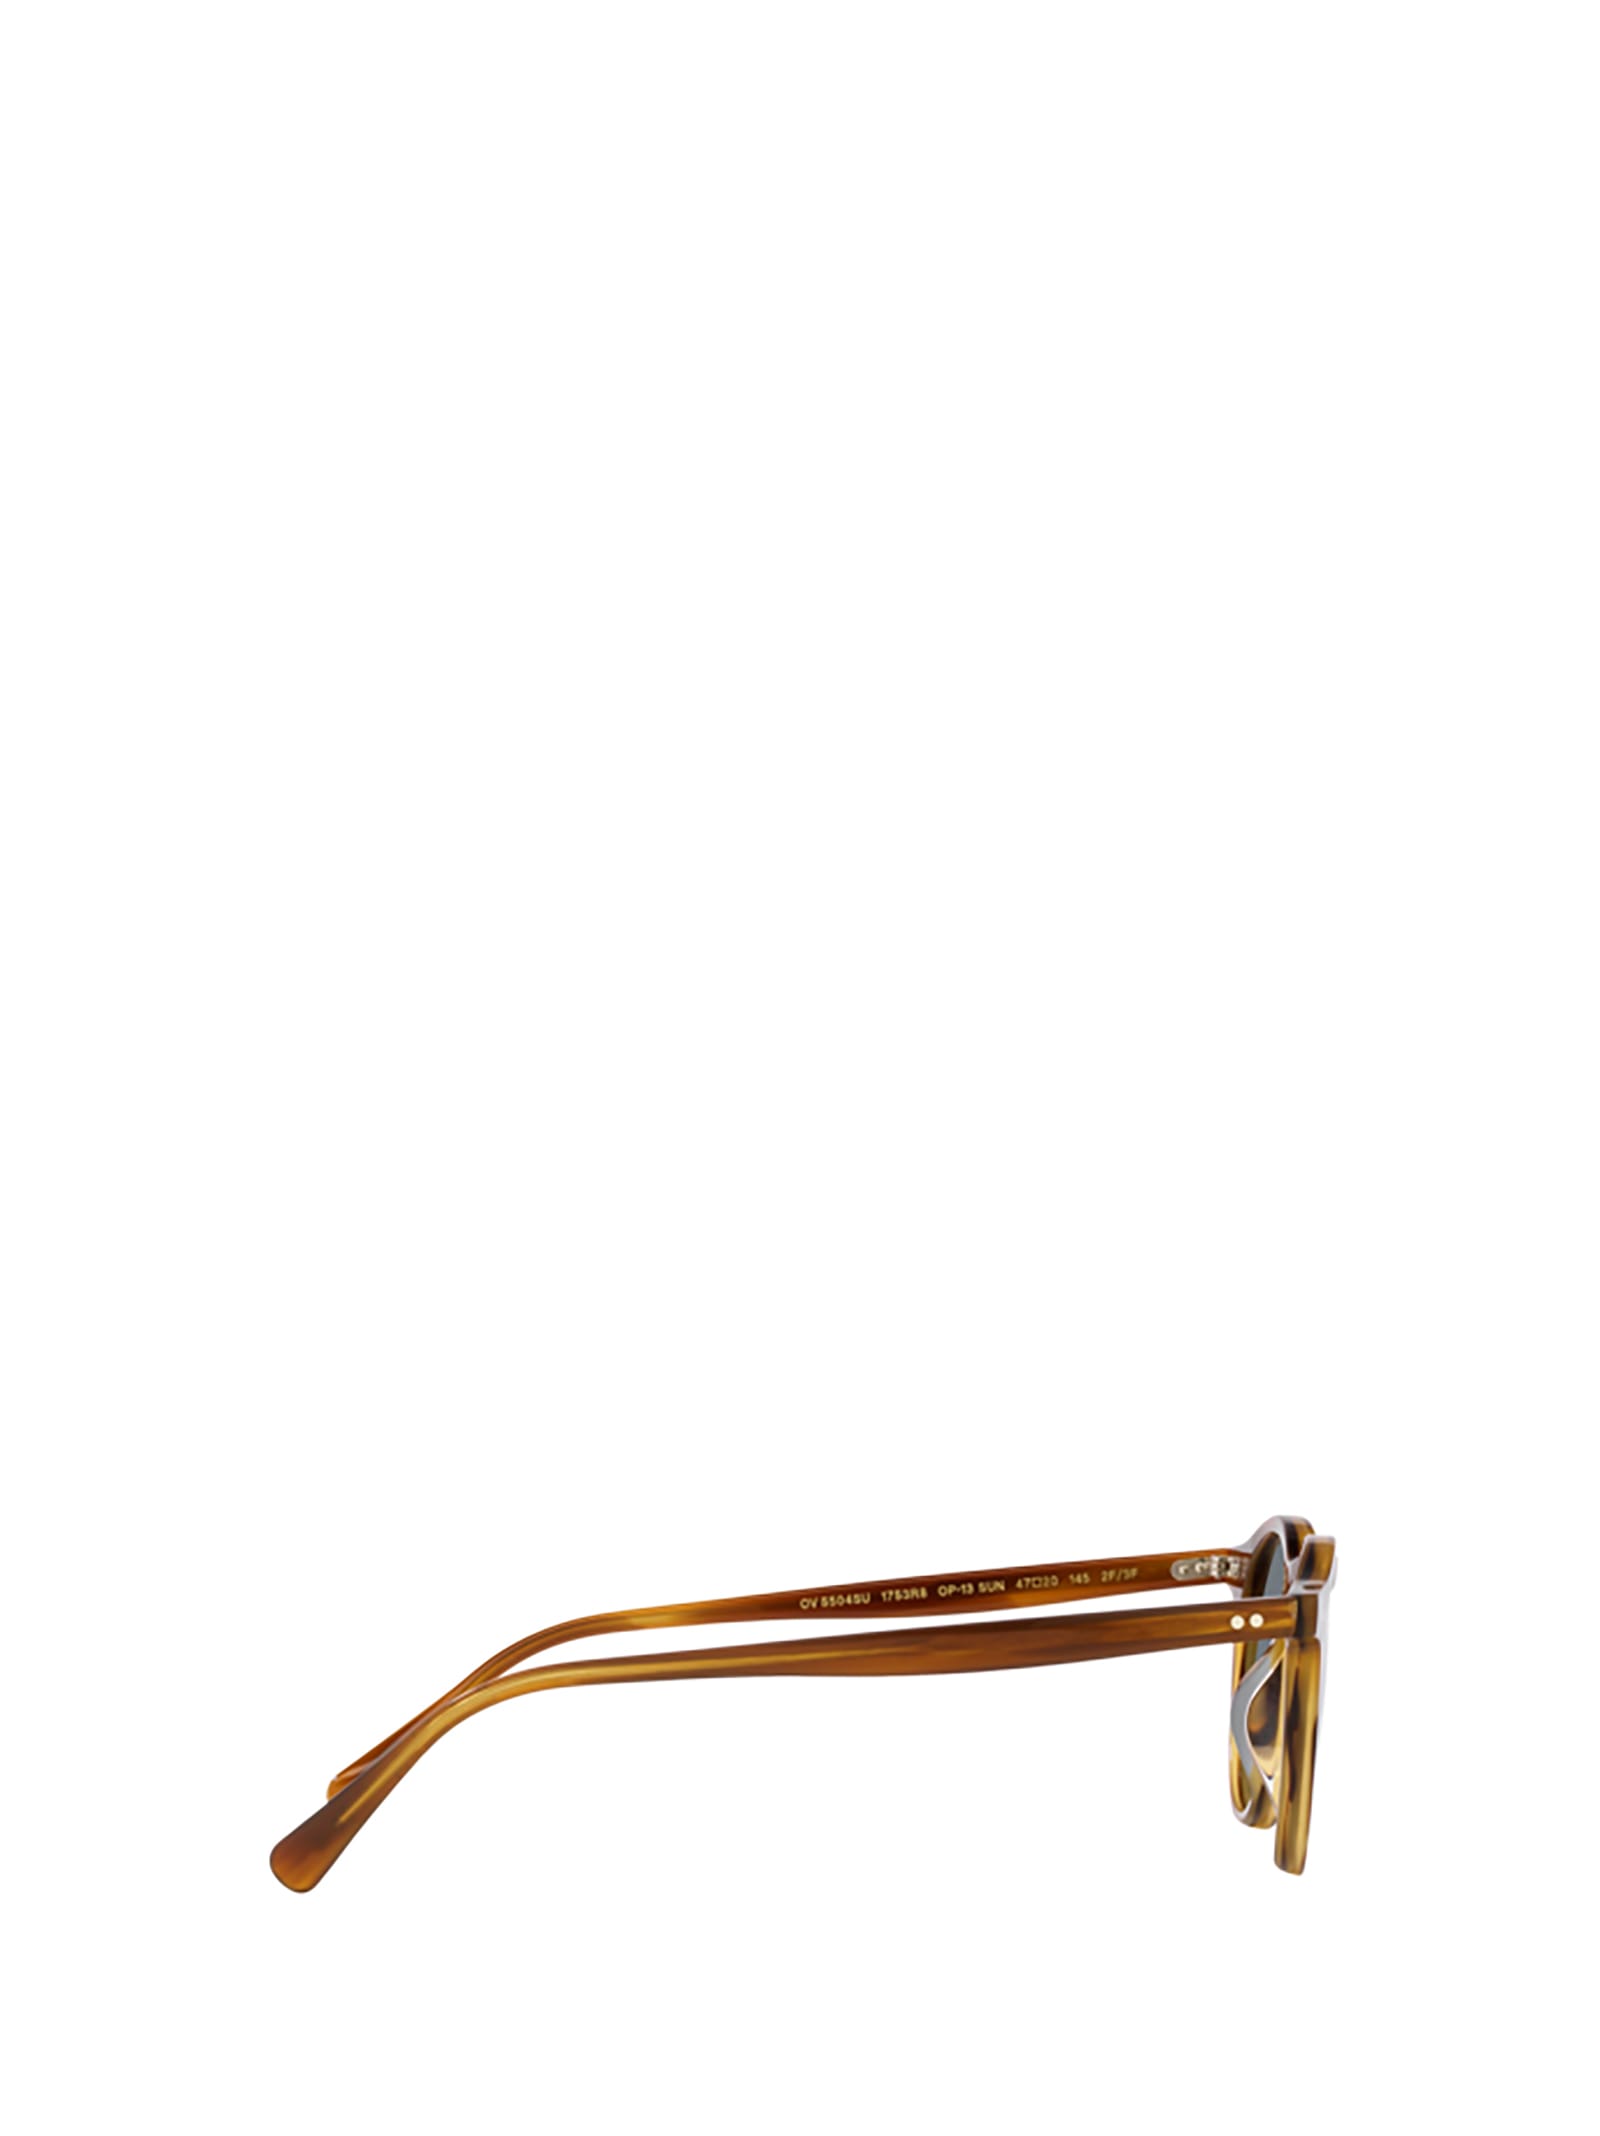 Shop Oliver Peoples Ov5504su Sycamore Sunglasses